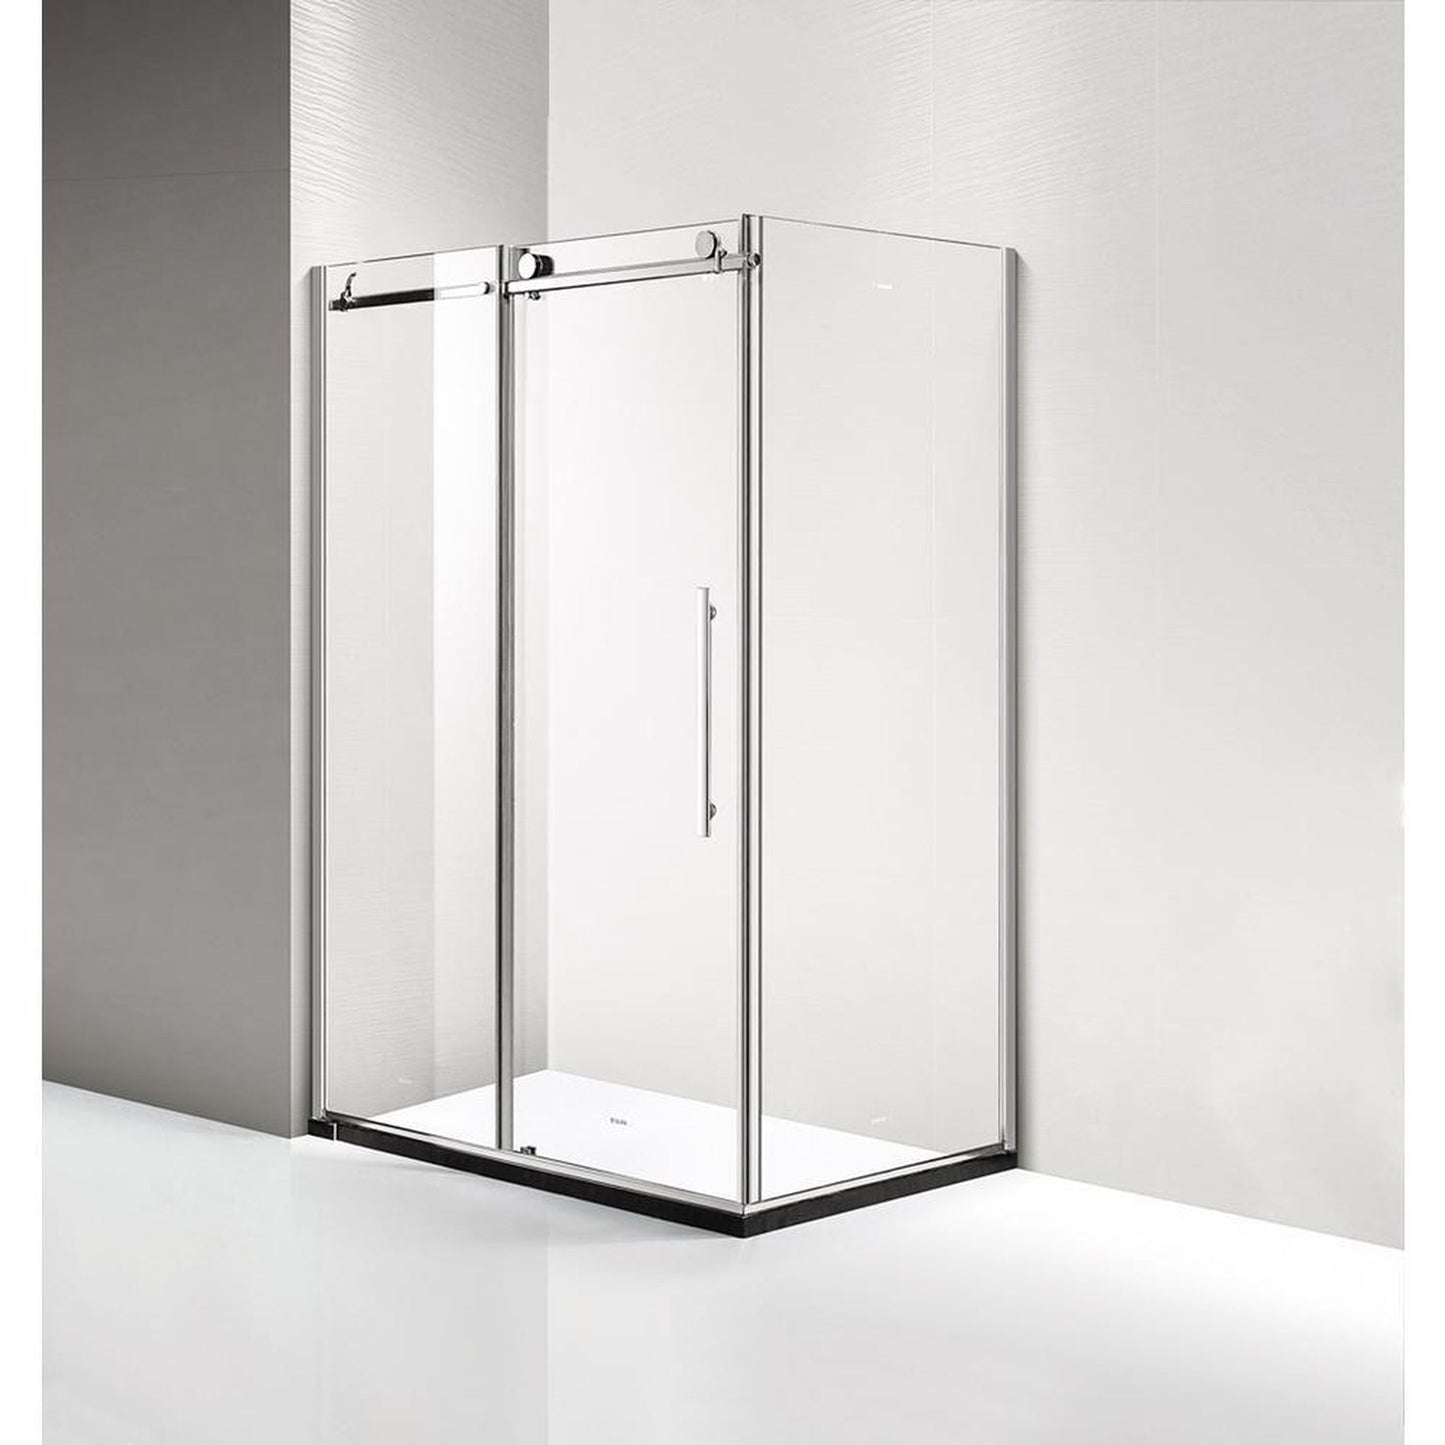 Dreamwerks 60" x 79" Clear Glass Frameless Sliding Shower Door With Stainless Steel Handles